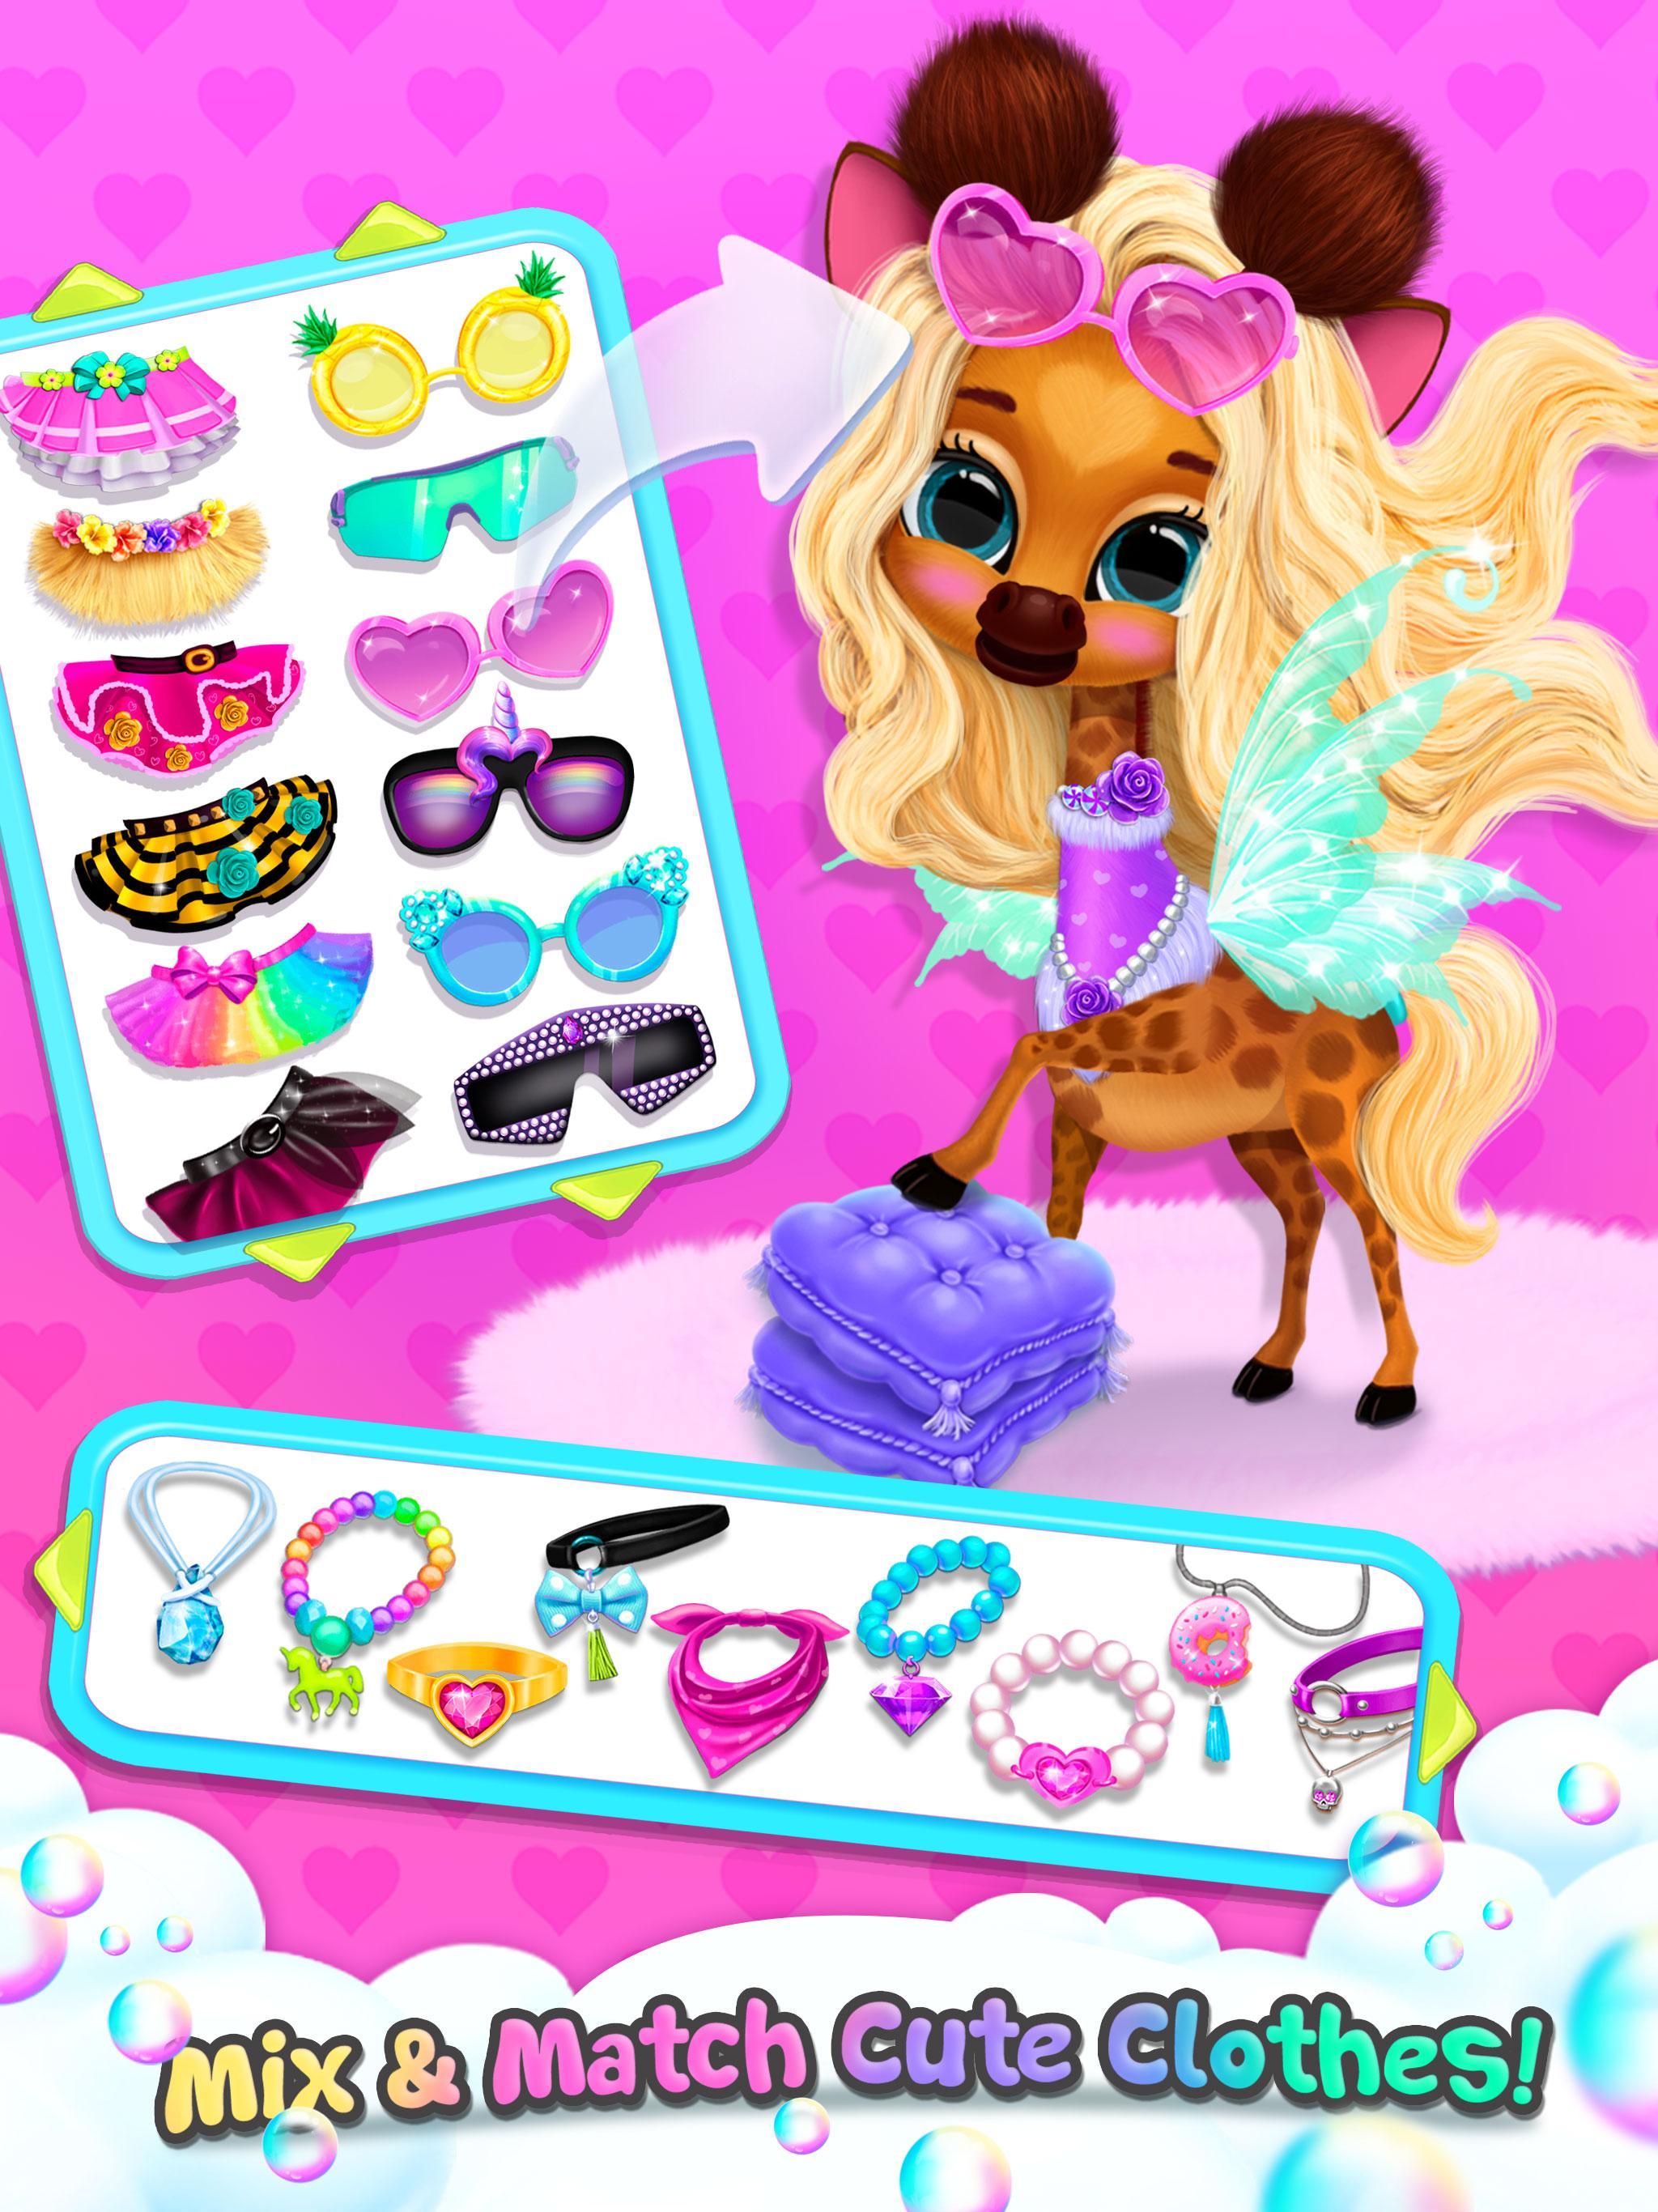 Kiki & Fifi Bubble Party - Fun with Virtual Pets 1.1.21 Screenshot 18